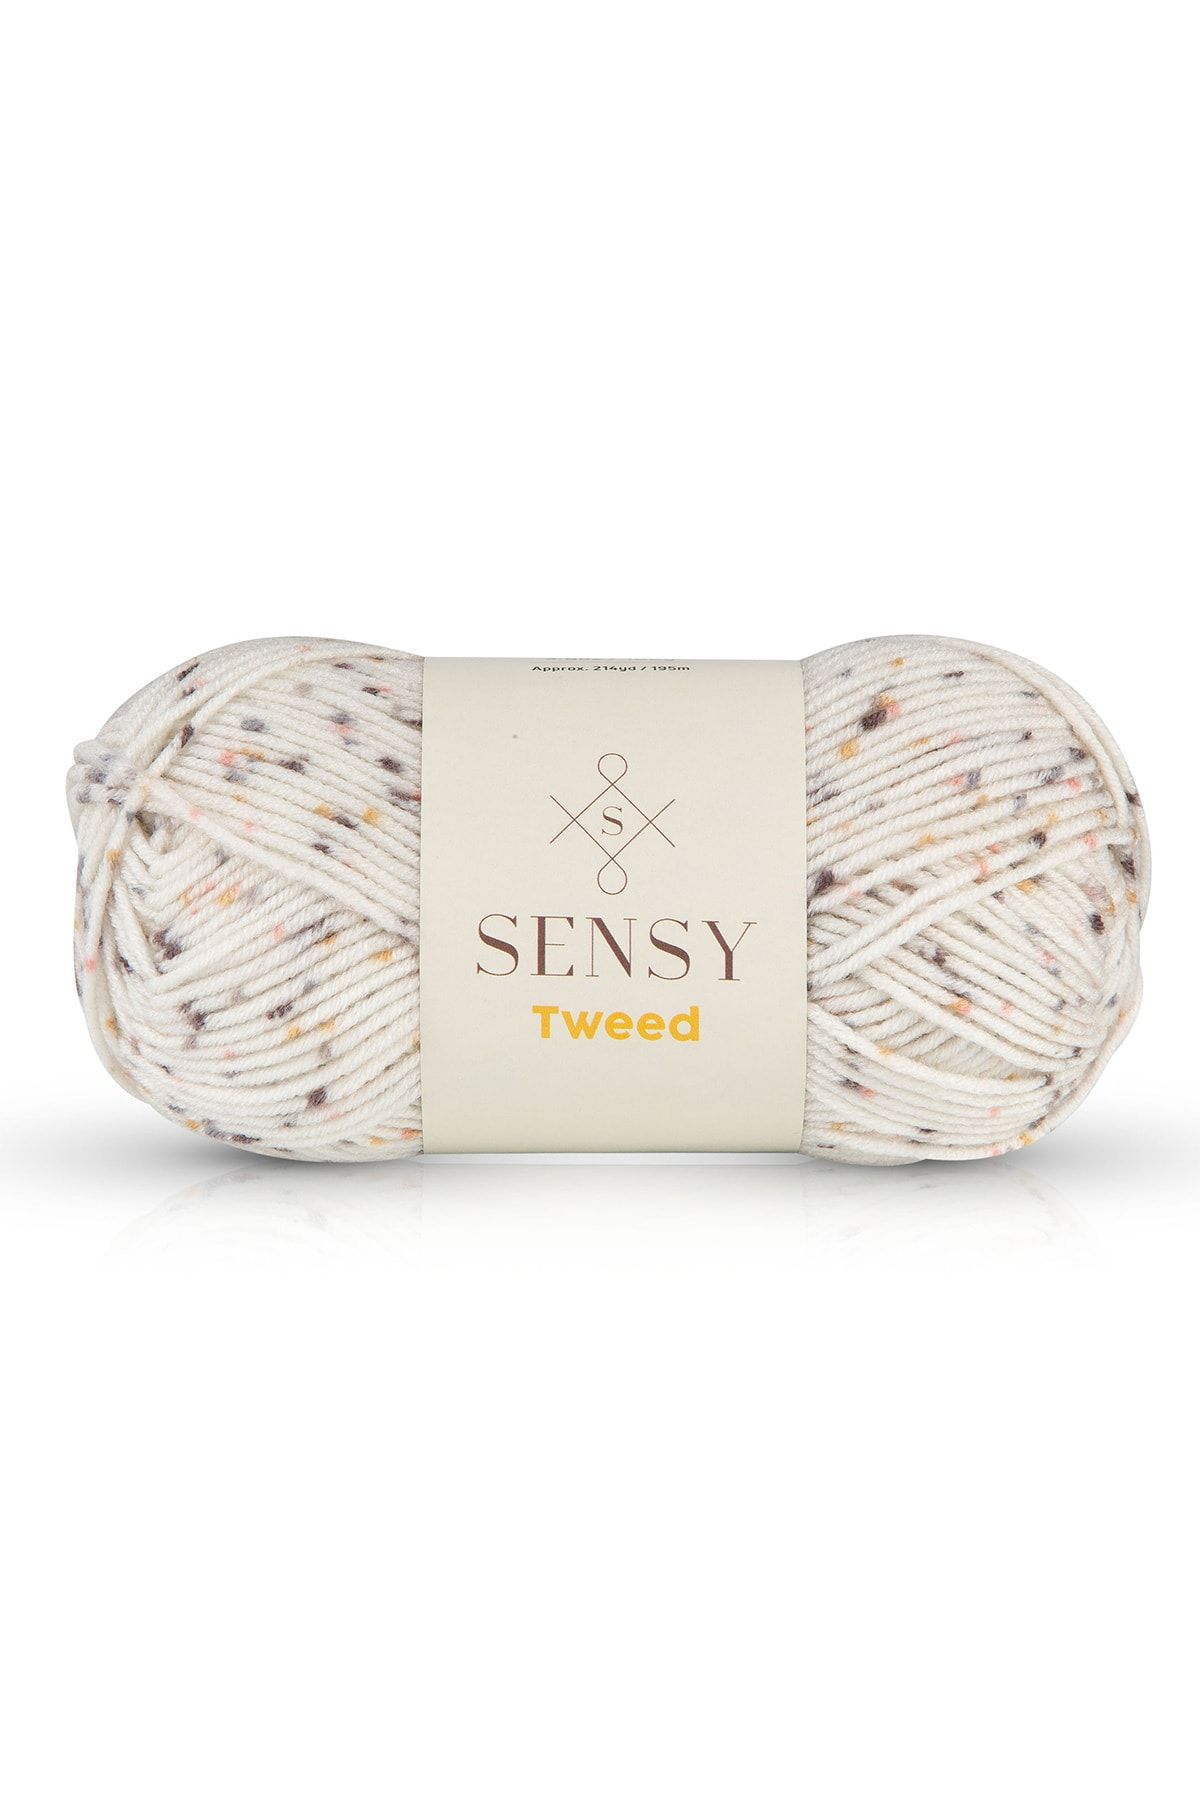 SENSY Premium Tweed El Örgü Ipi Bere Atkı Ipi Hırka Kazak Ip Ev Tekstil Ipliği Beyaz